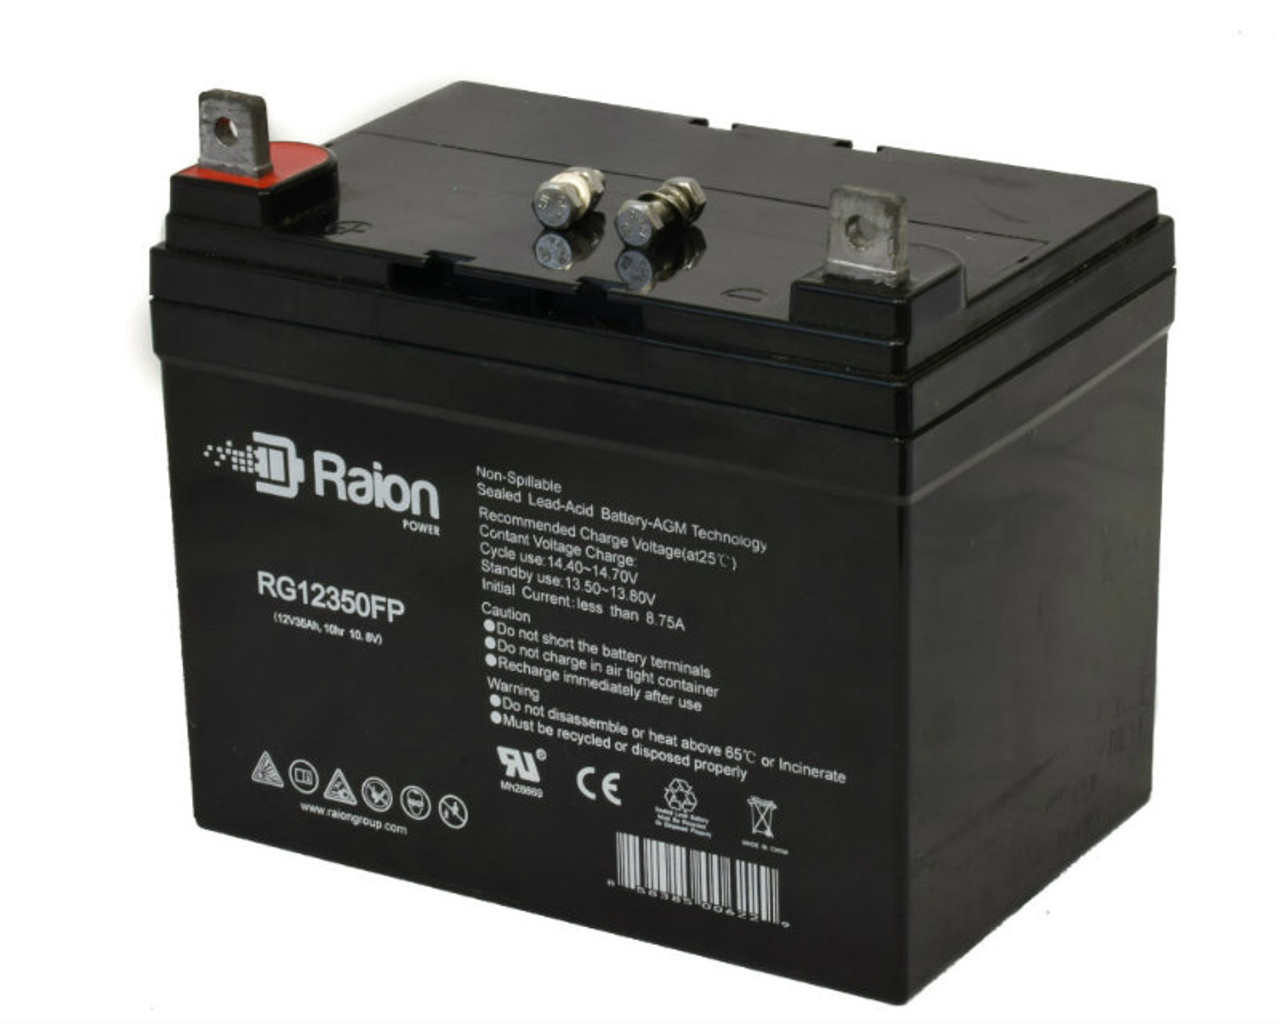 Raion Power RG12350FP 12V 35Ah Lead Acid Battery for Schumacher DSR DSR102 Proboost Jump Starter